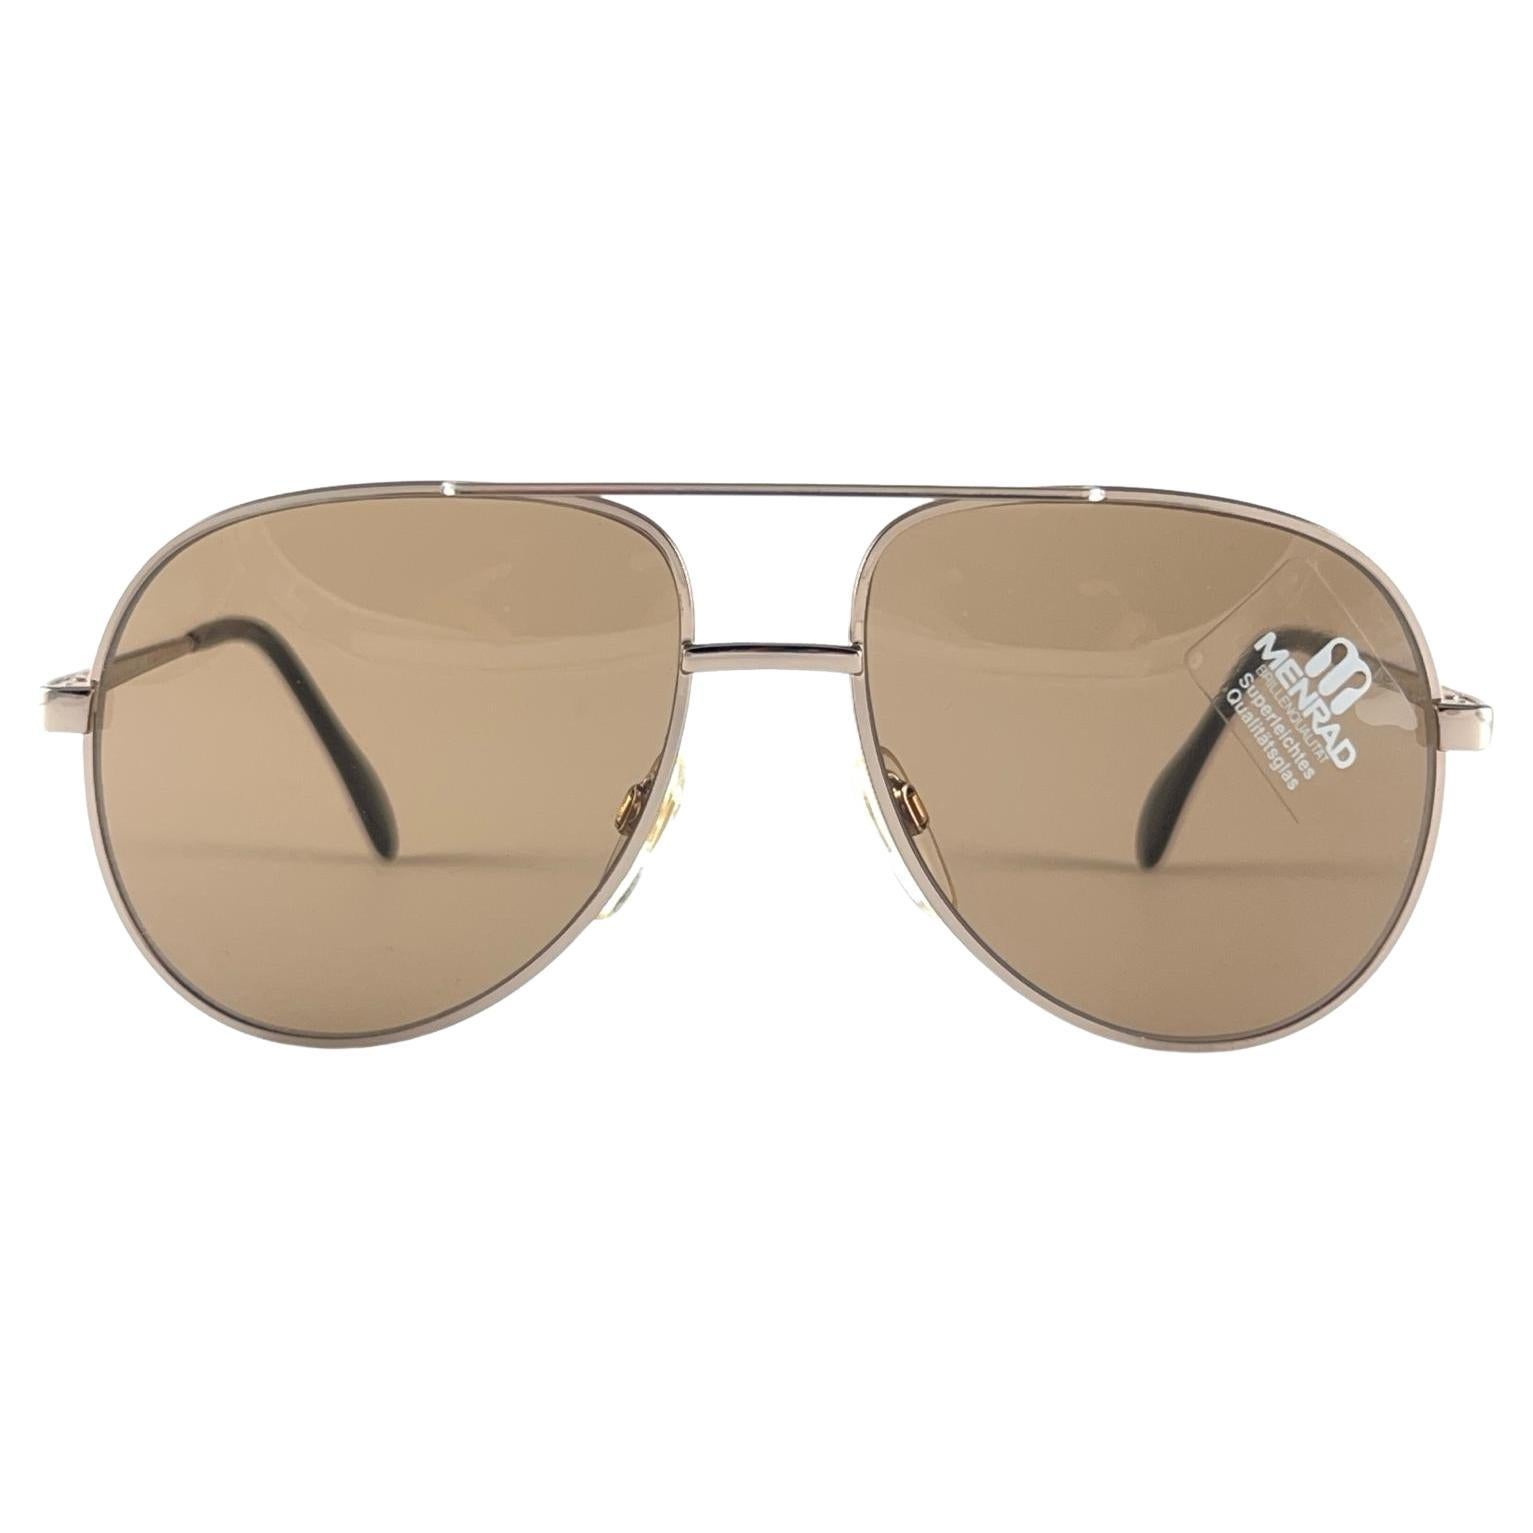 New Vintage Menrad 635 Aviator Light Gold Frame Sunglasses 70'S Made in Germany For Sale